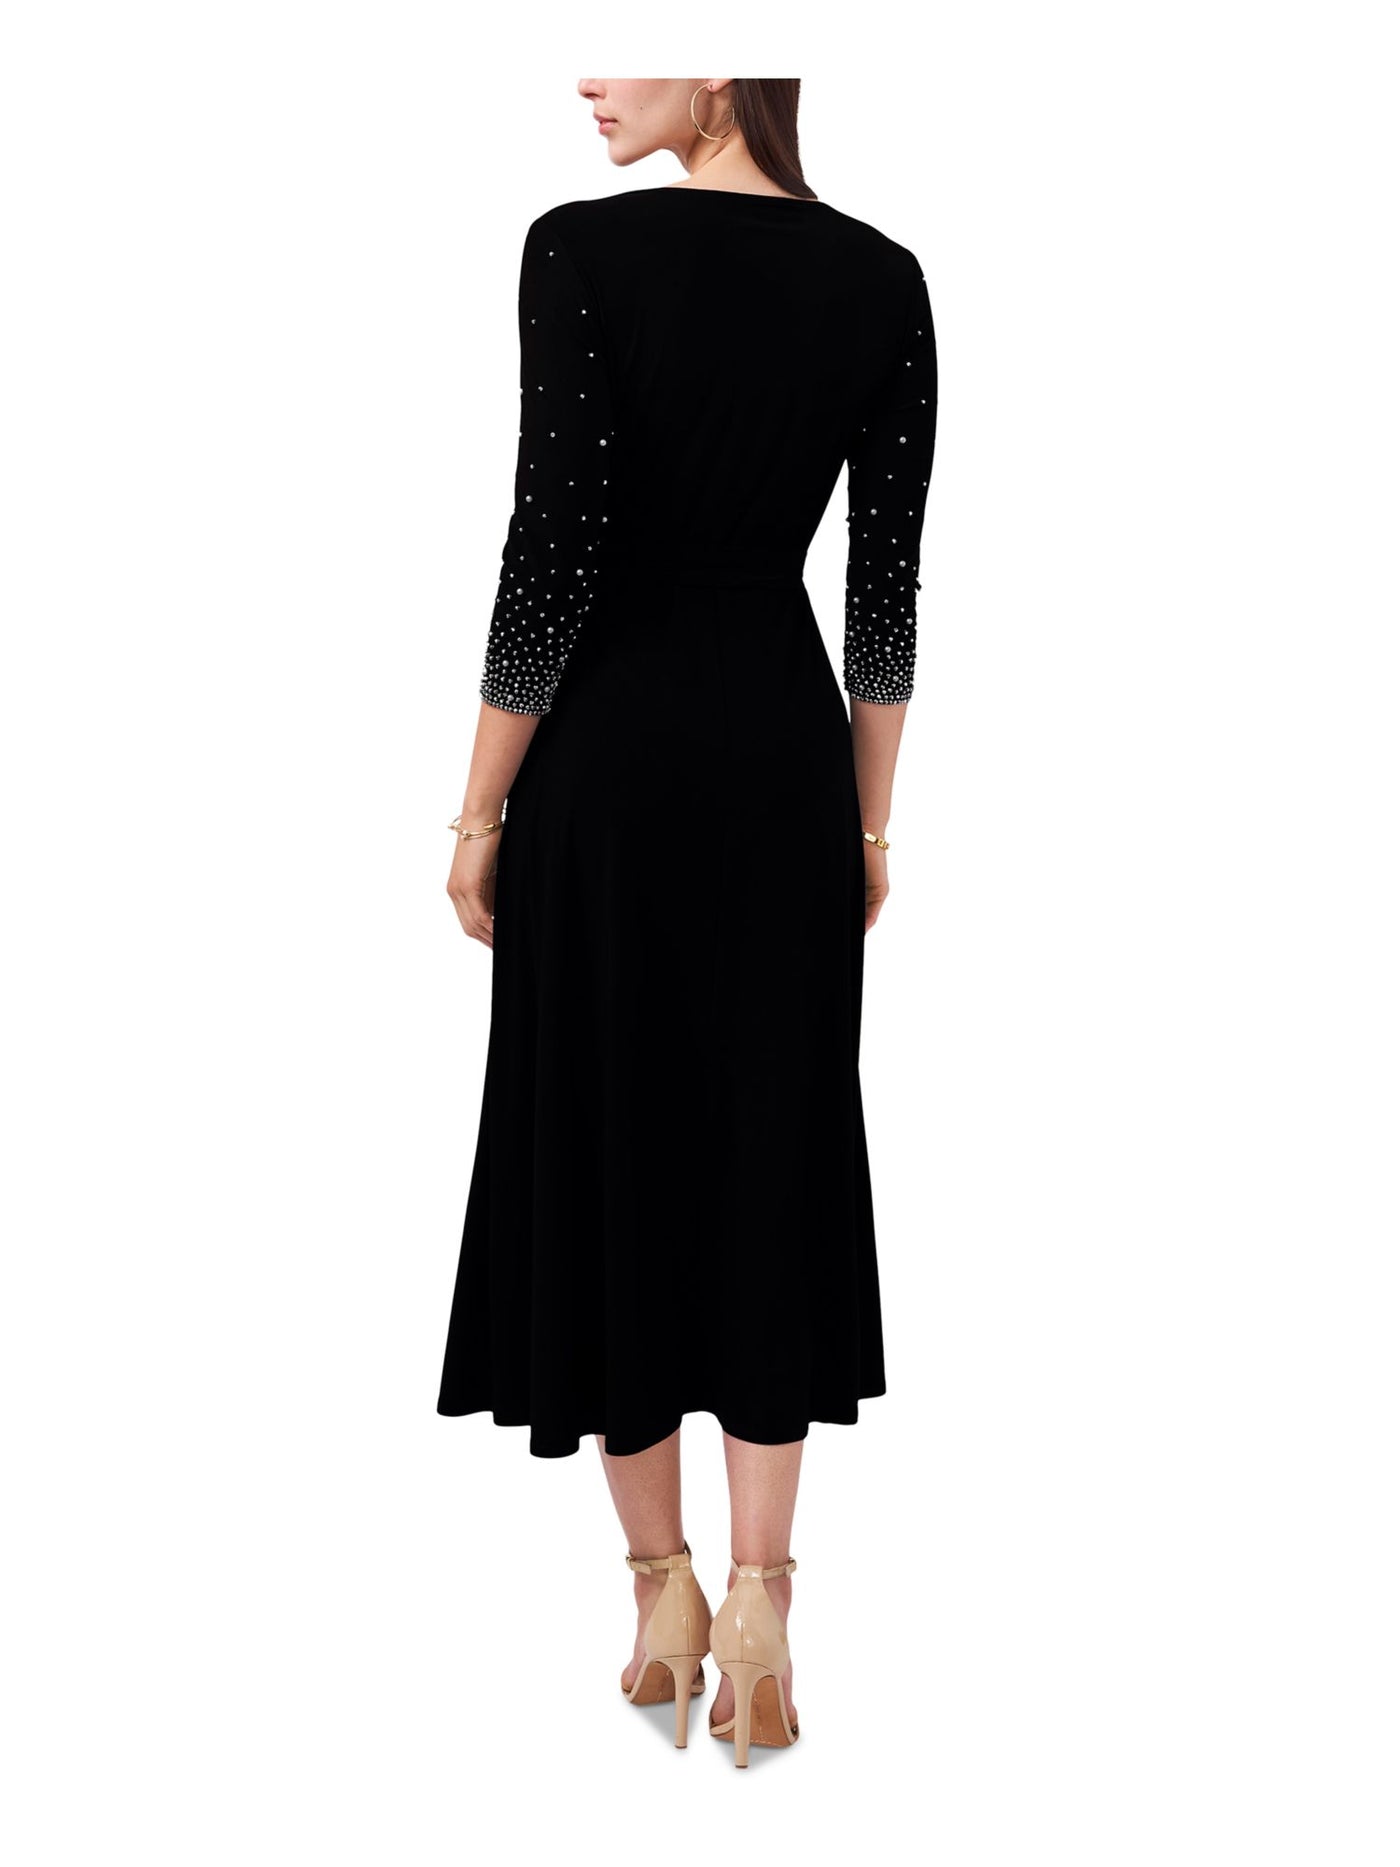 MSK PETITES Womens Black Embellished Belted Pullover 3/4 Sleeve V Neck Midi Party Fit + Flare Dress Petites PM